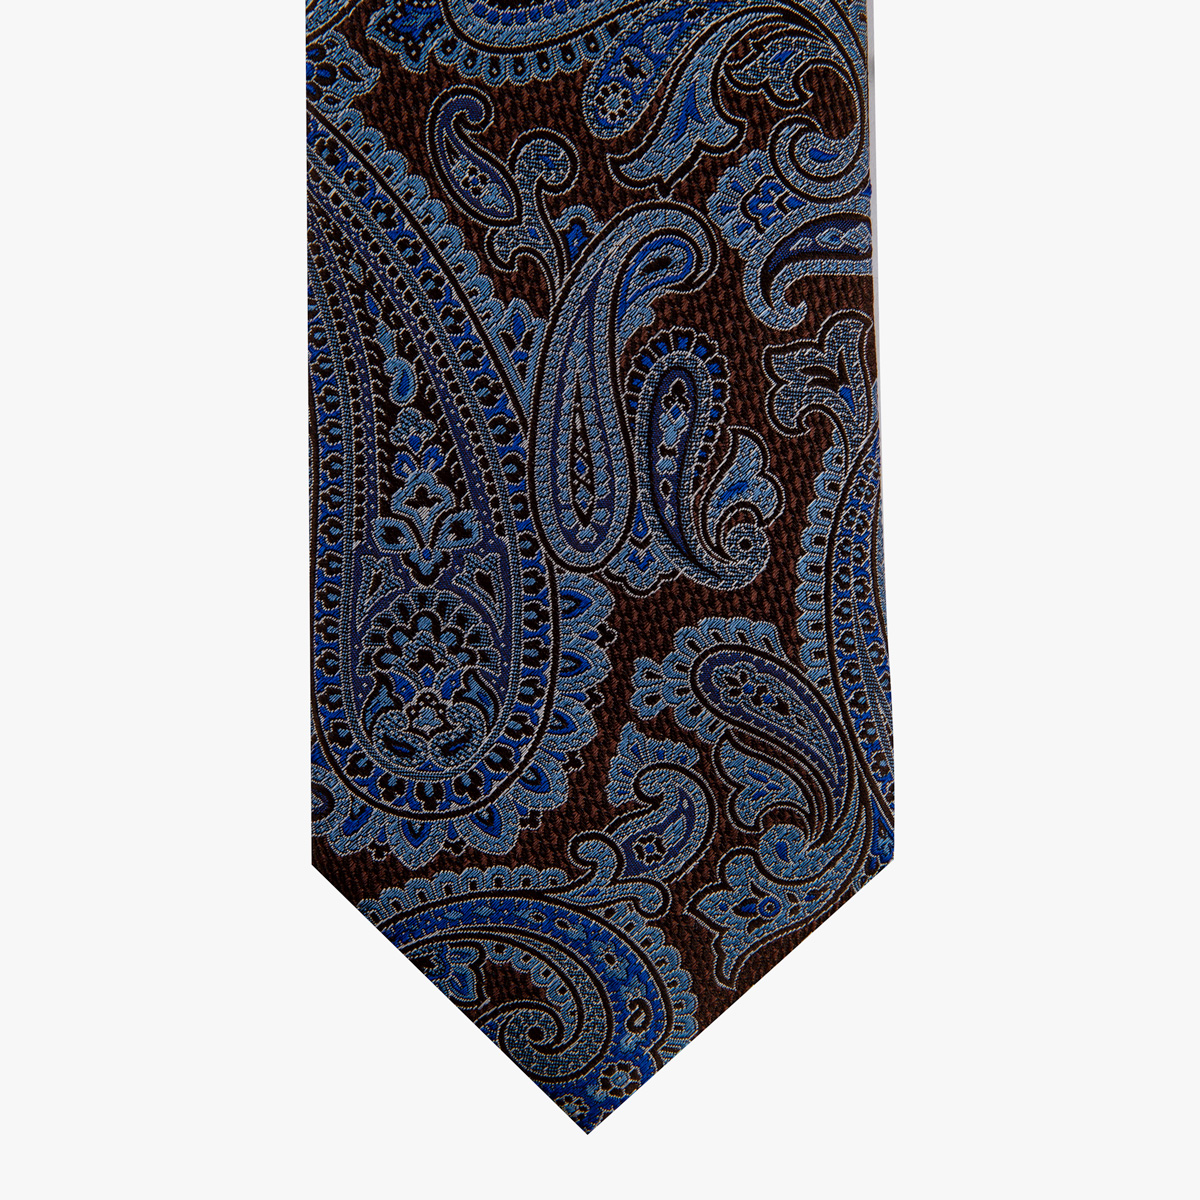 Krawatte glatt mit Paisley-Muster in braun blau